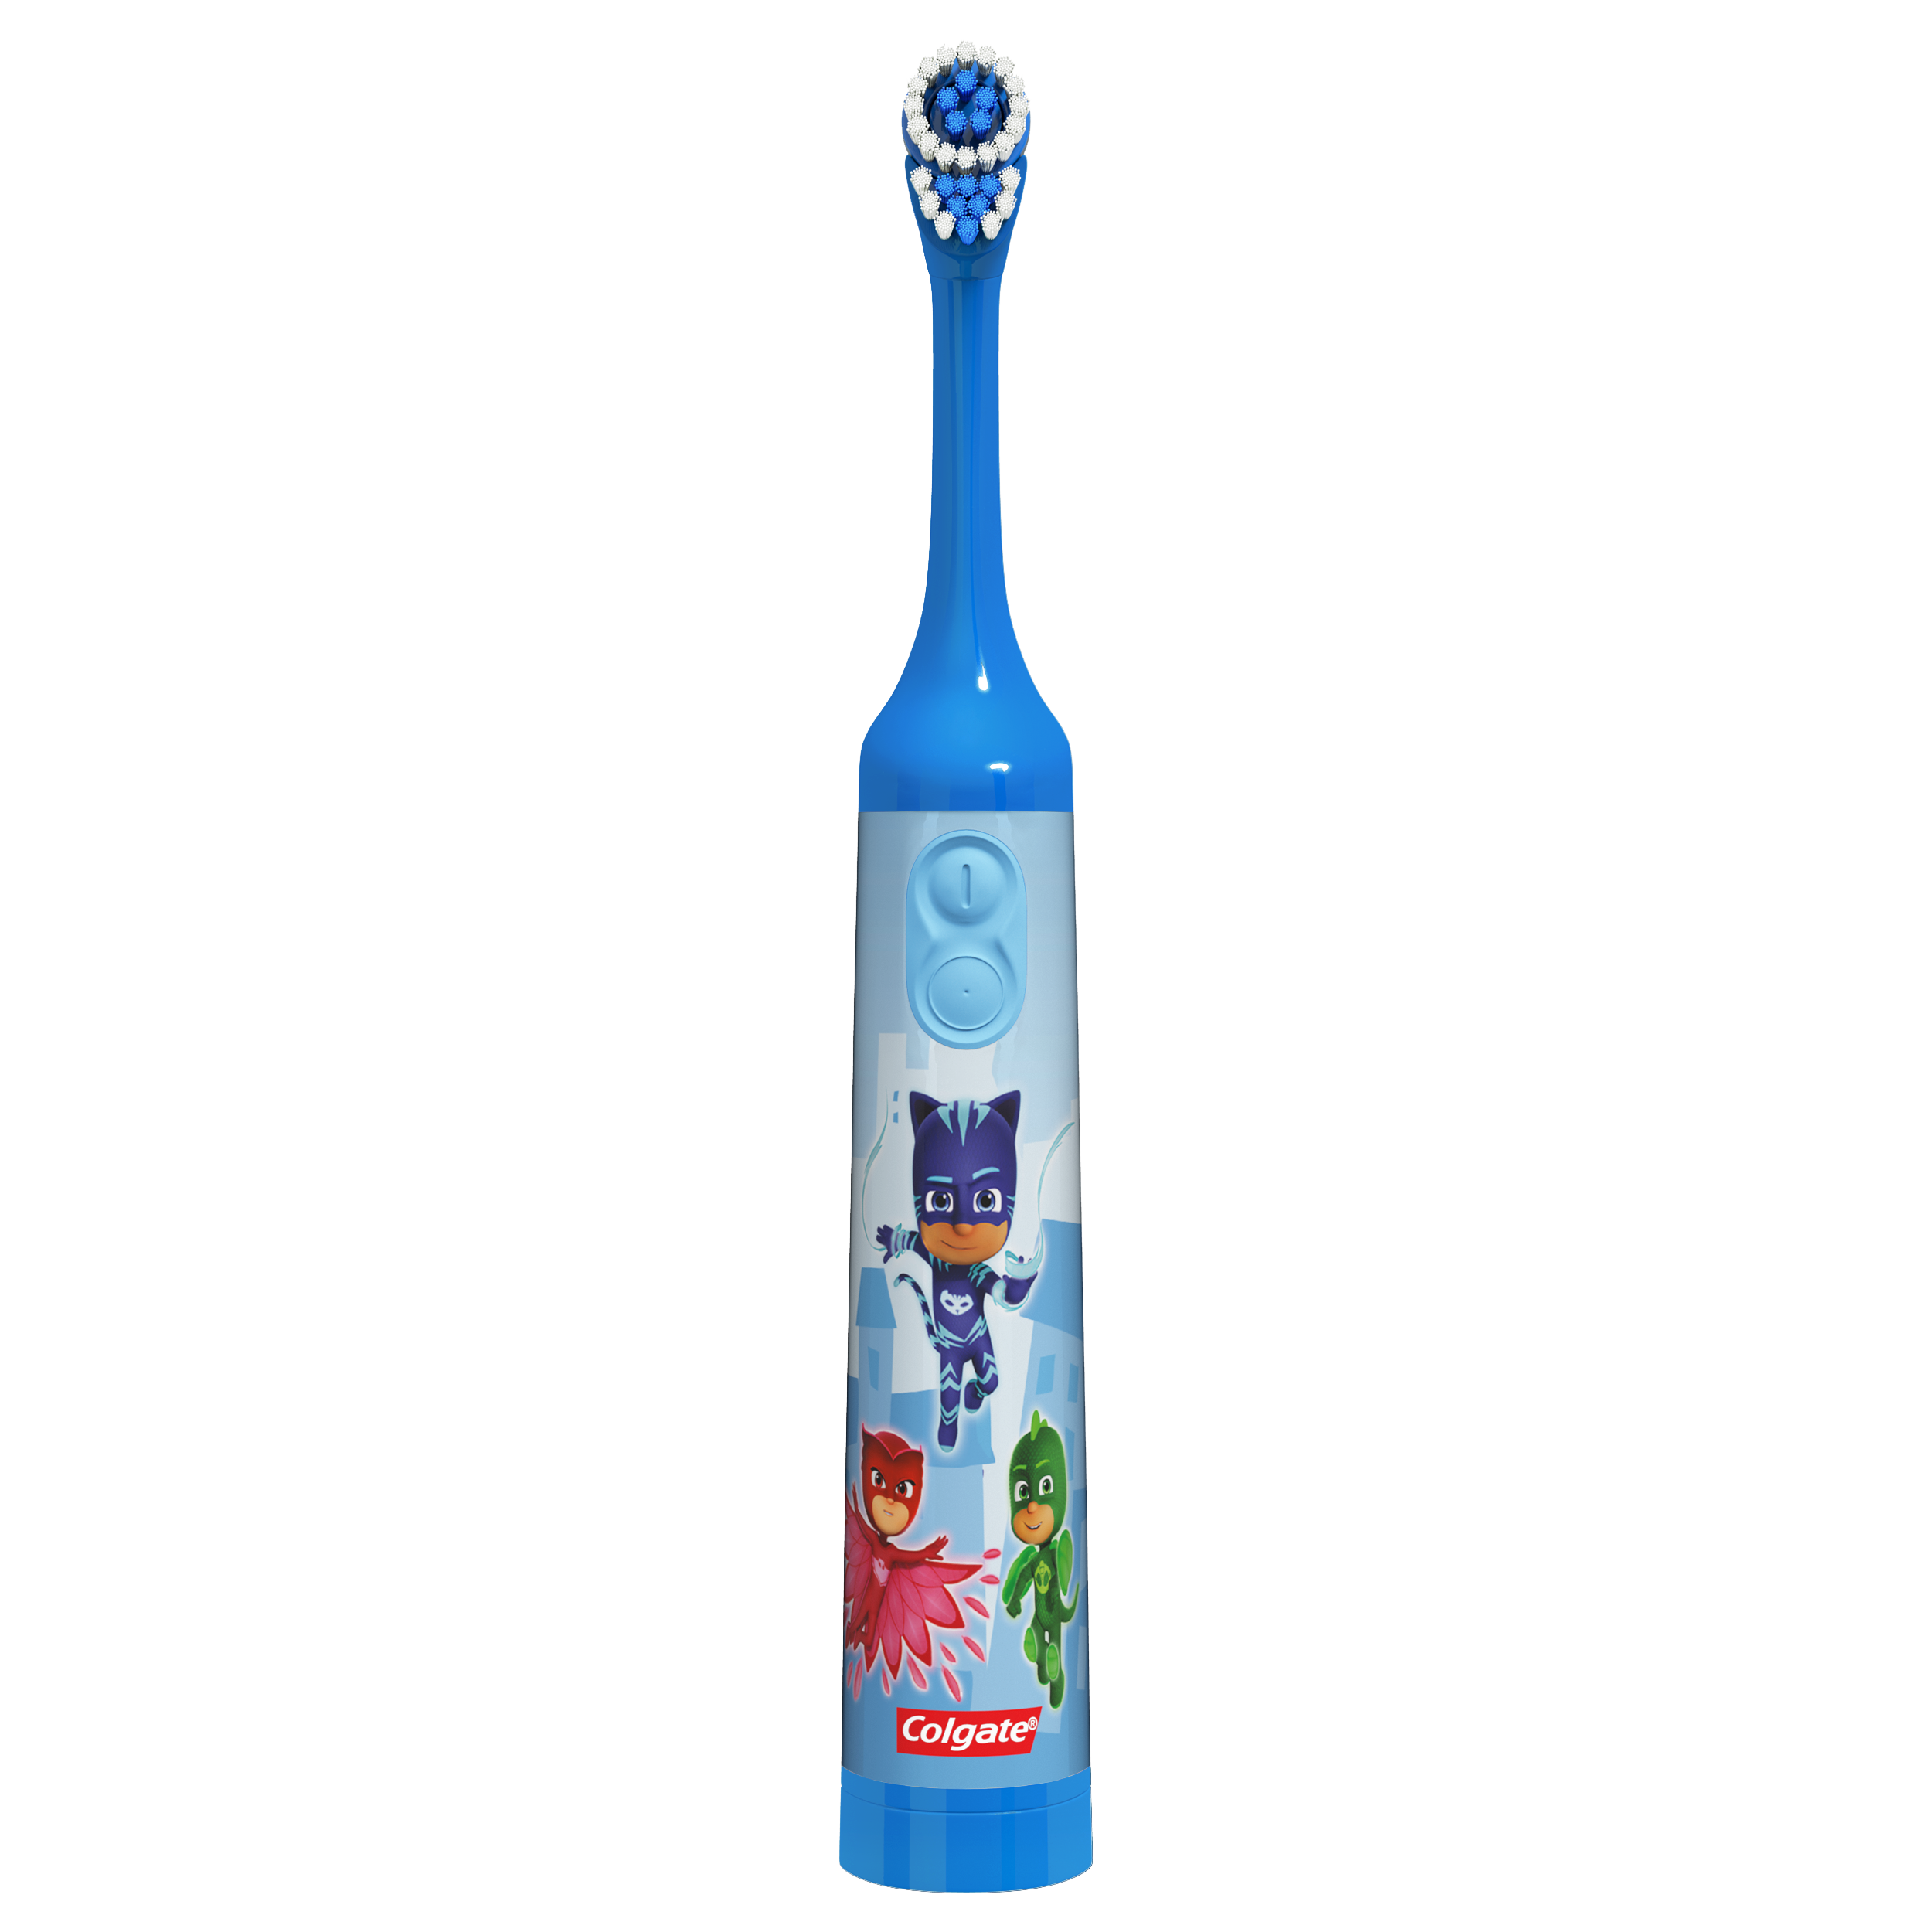 Colgate Kids PJ Masks Battery Toothbrush, 1 Pack - image 9 of 11